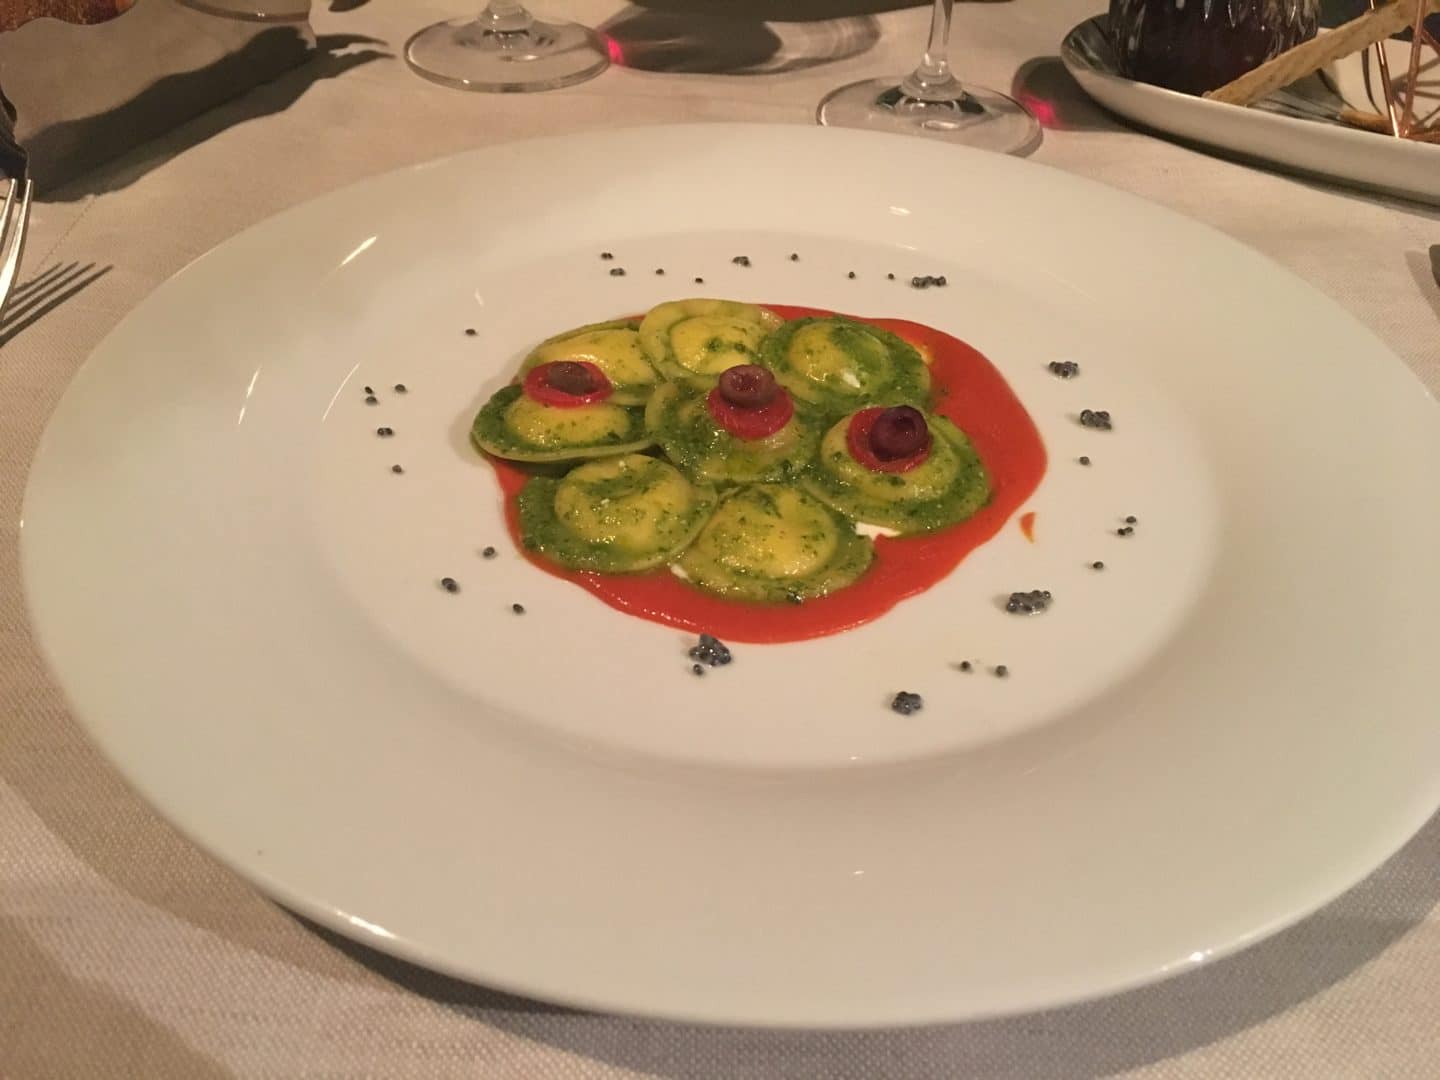 Locale Firenze restaurant green Ravioli stuffed with Burrata in a tomato sauce on a white plate